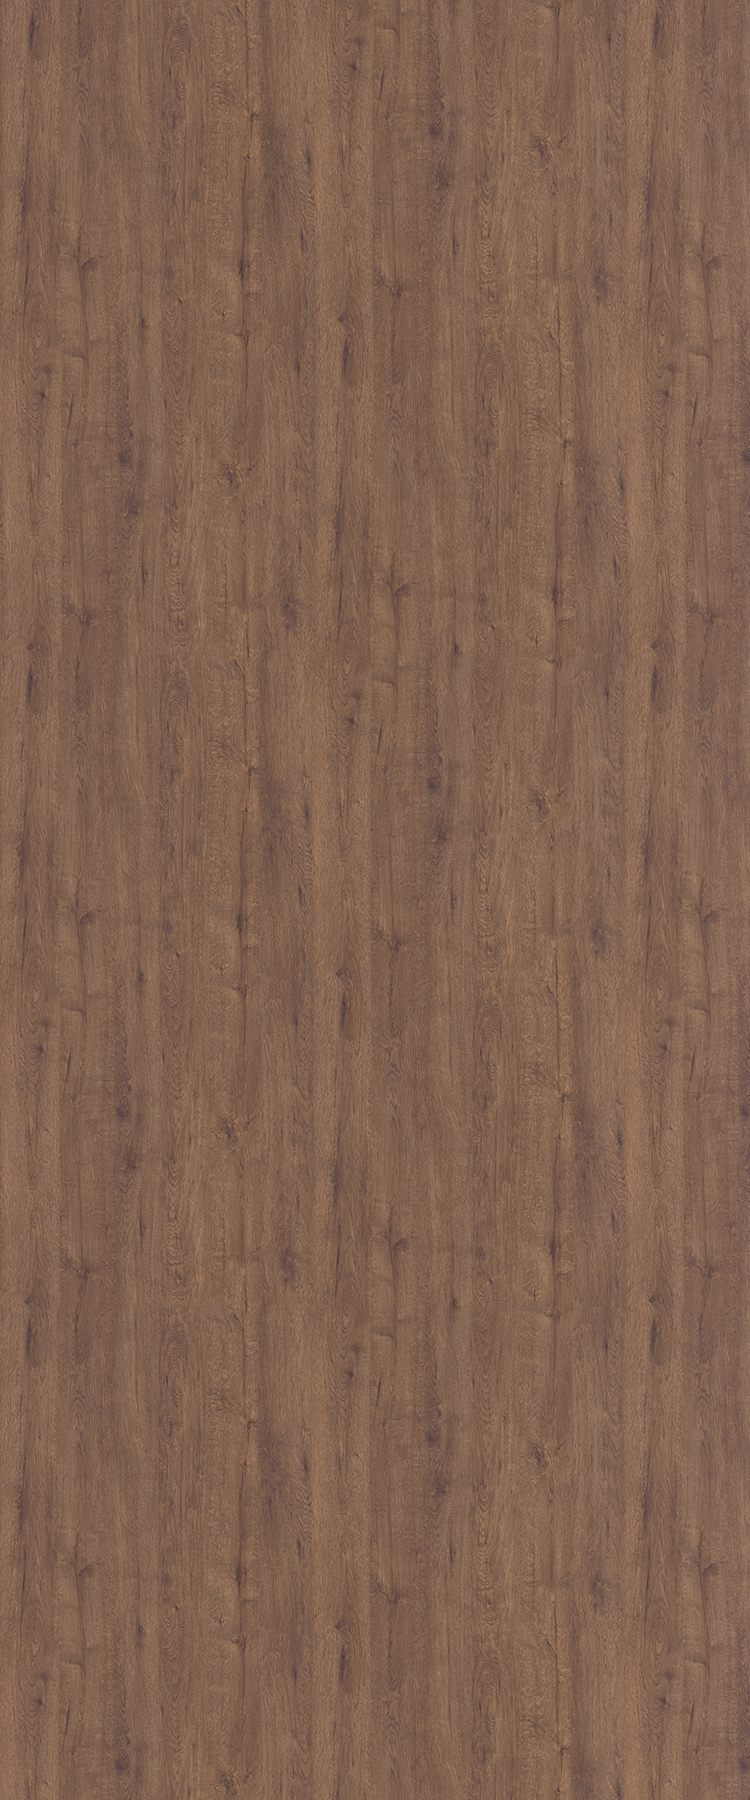 9643 Cinder Wood